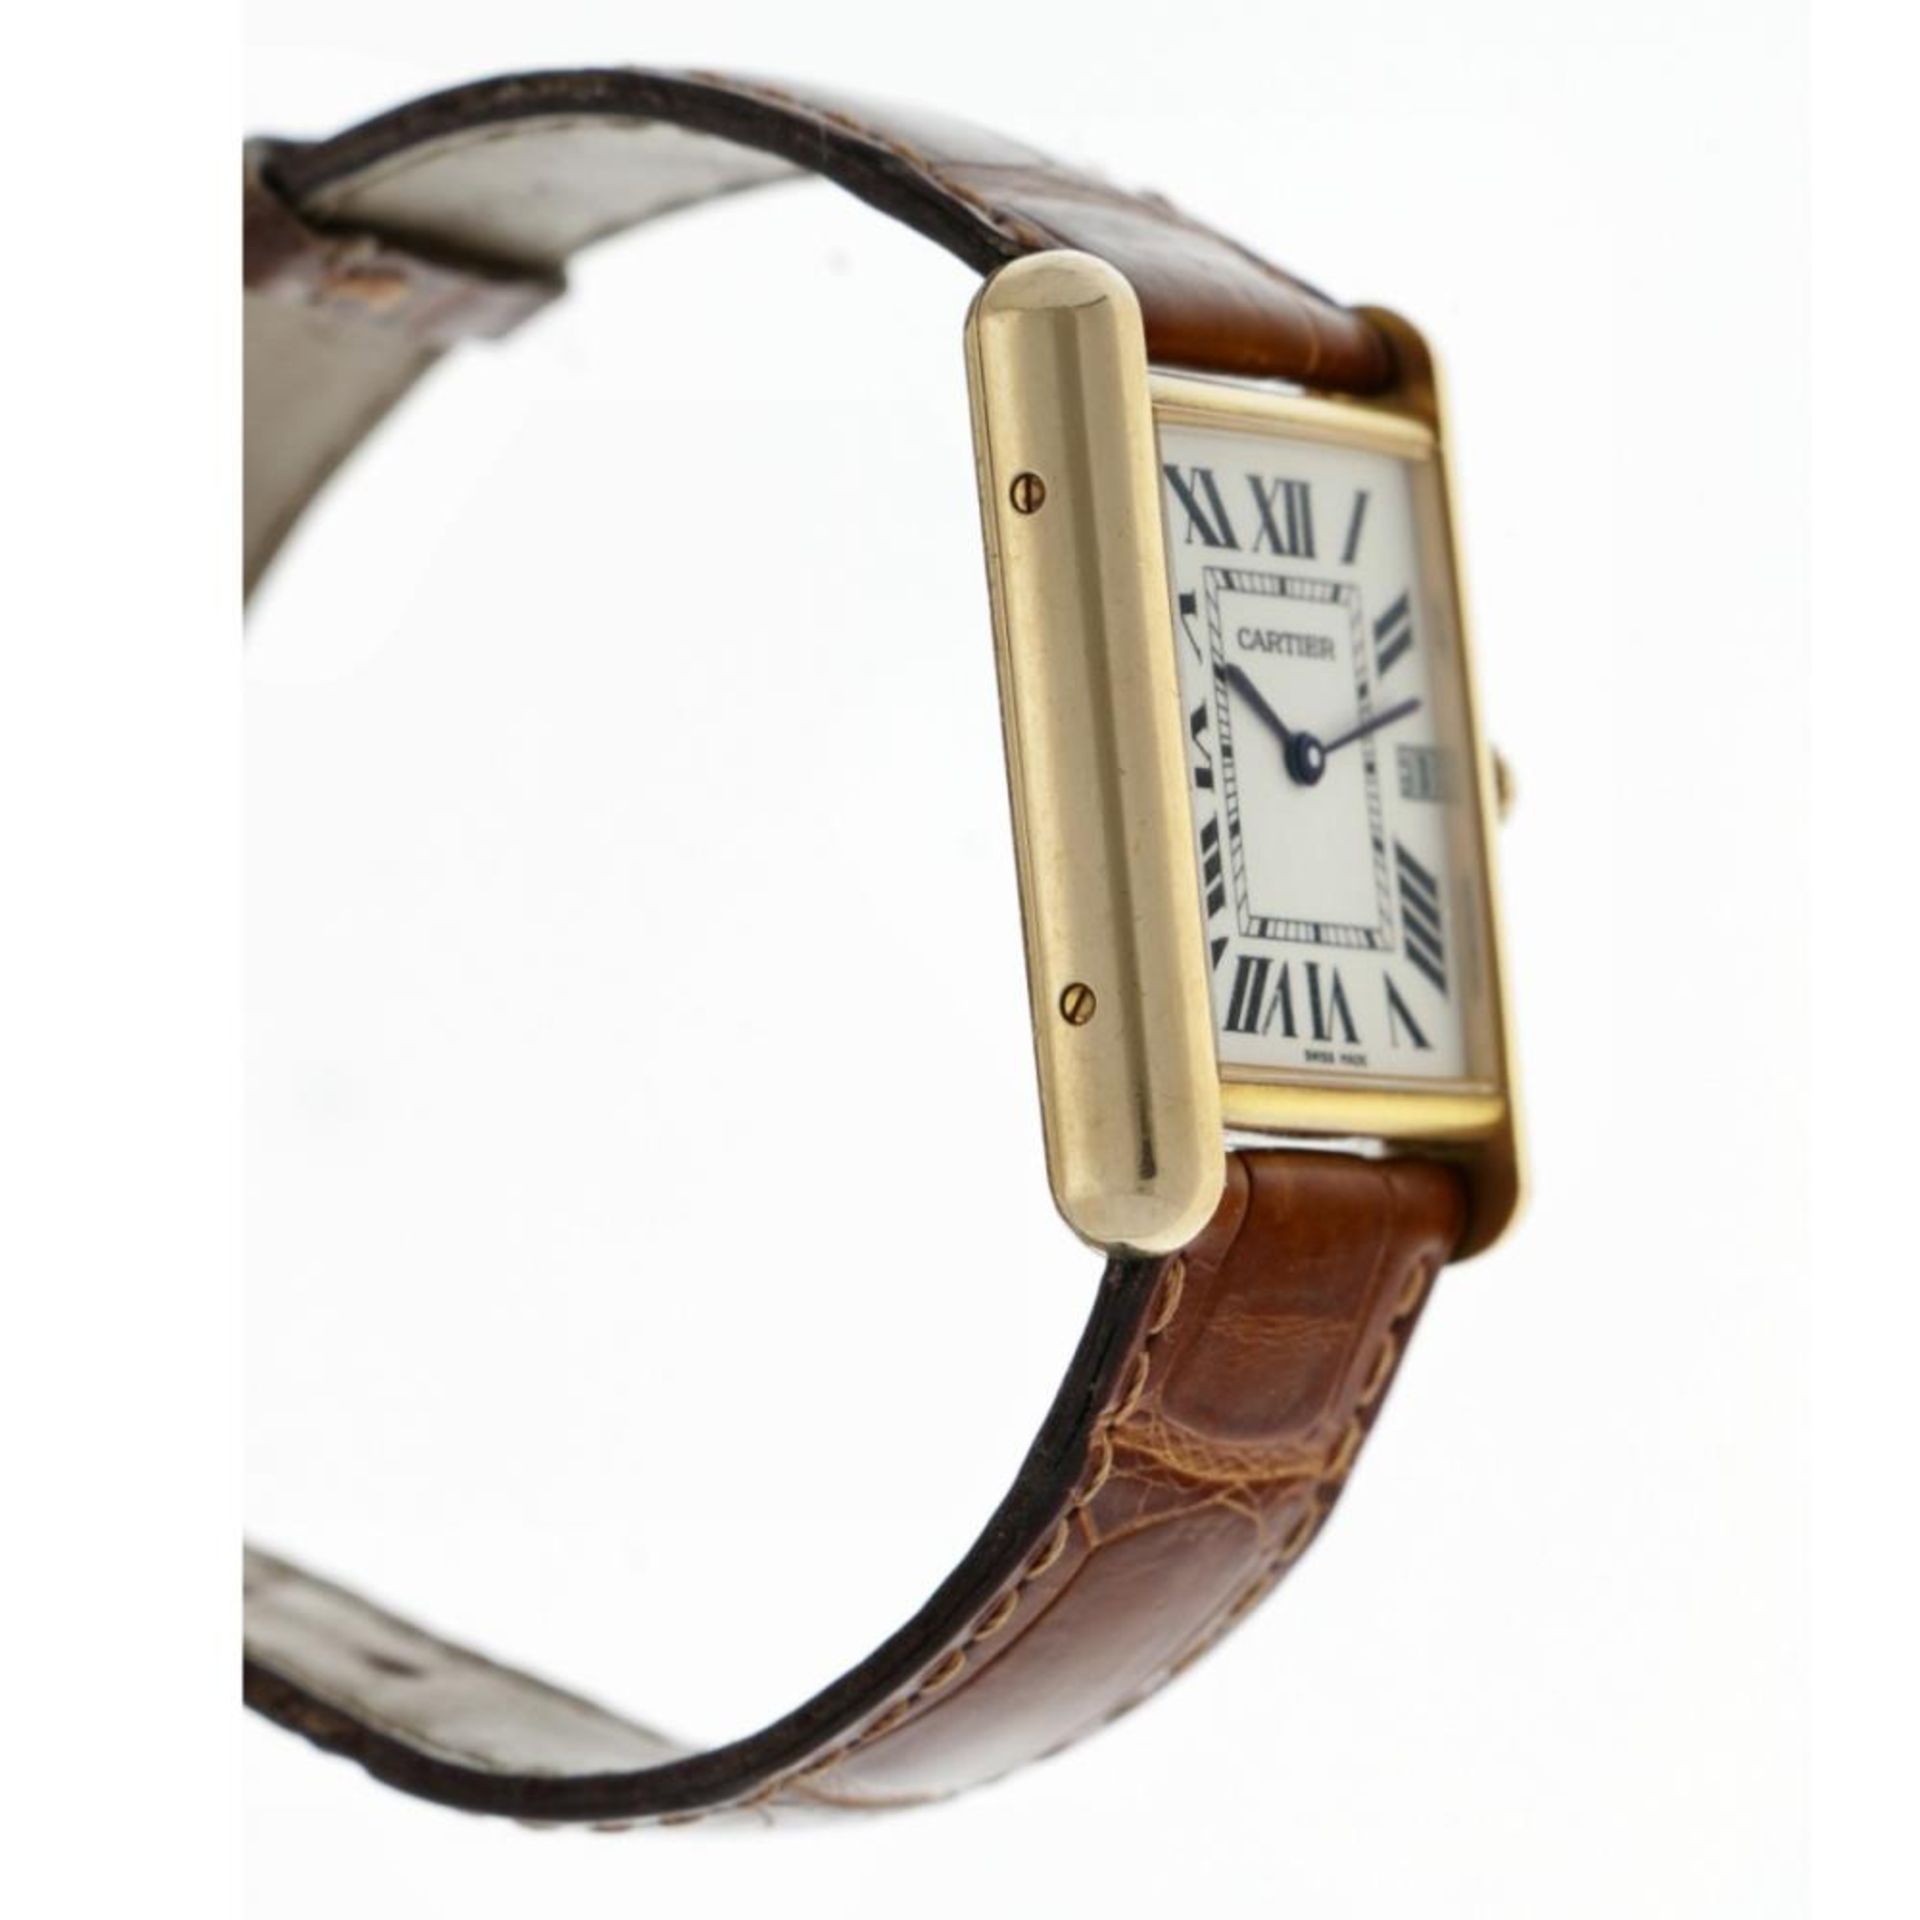 Cartier Tank Louis 2441 - 18 carat gold - Men's watch - approx. 2005. - Image 8 of 10